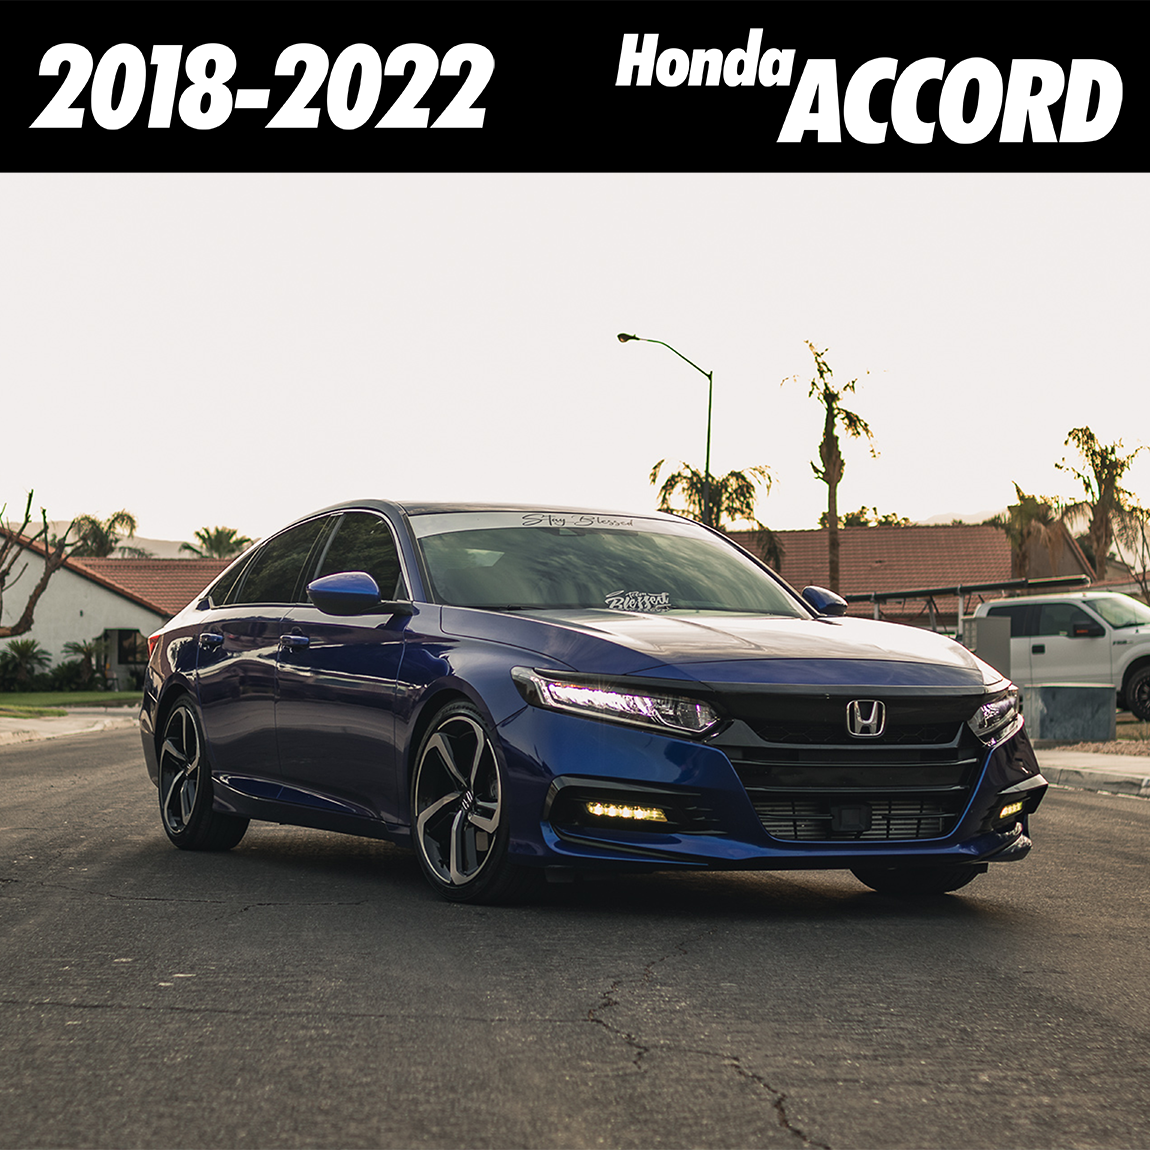 2018-2022 | Honda Accord